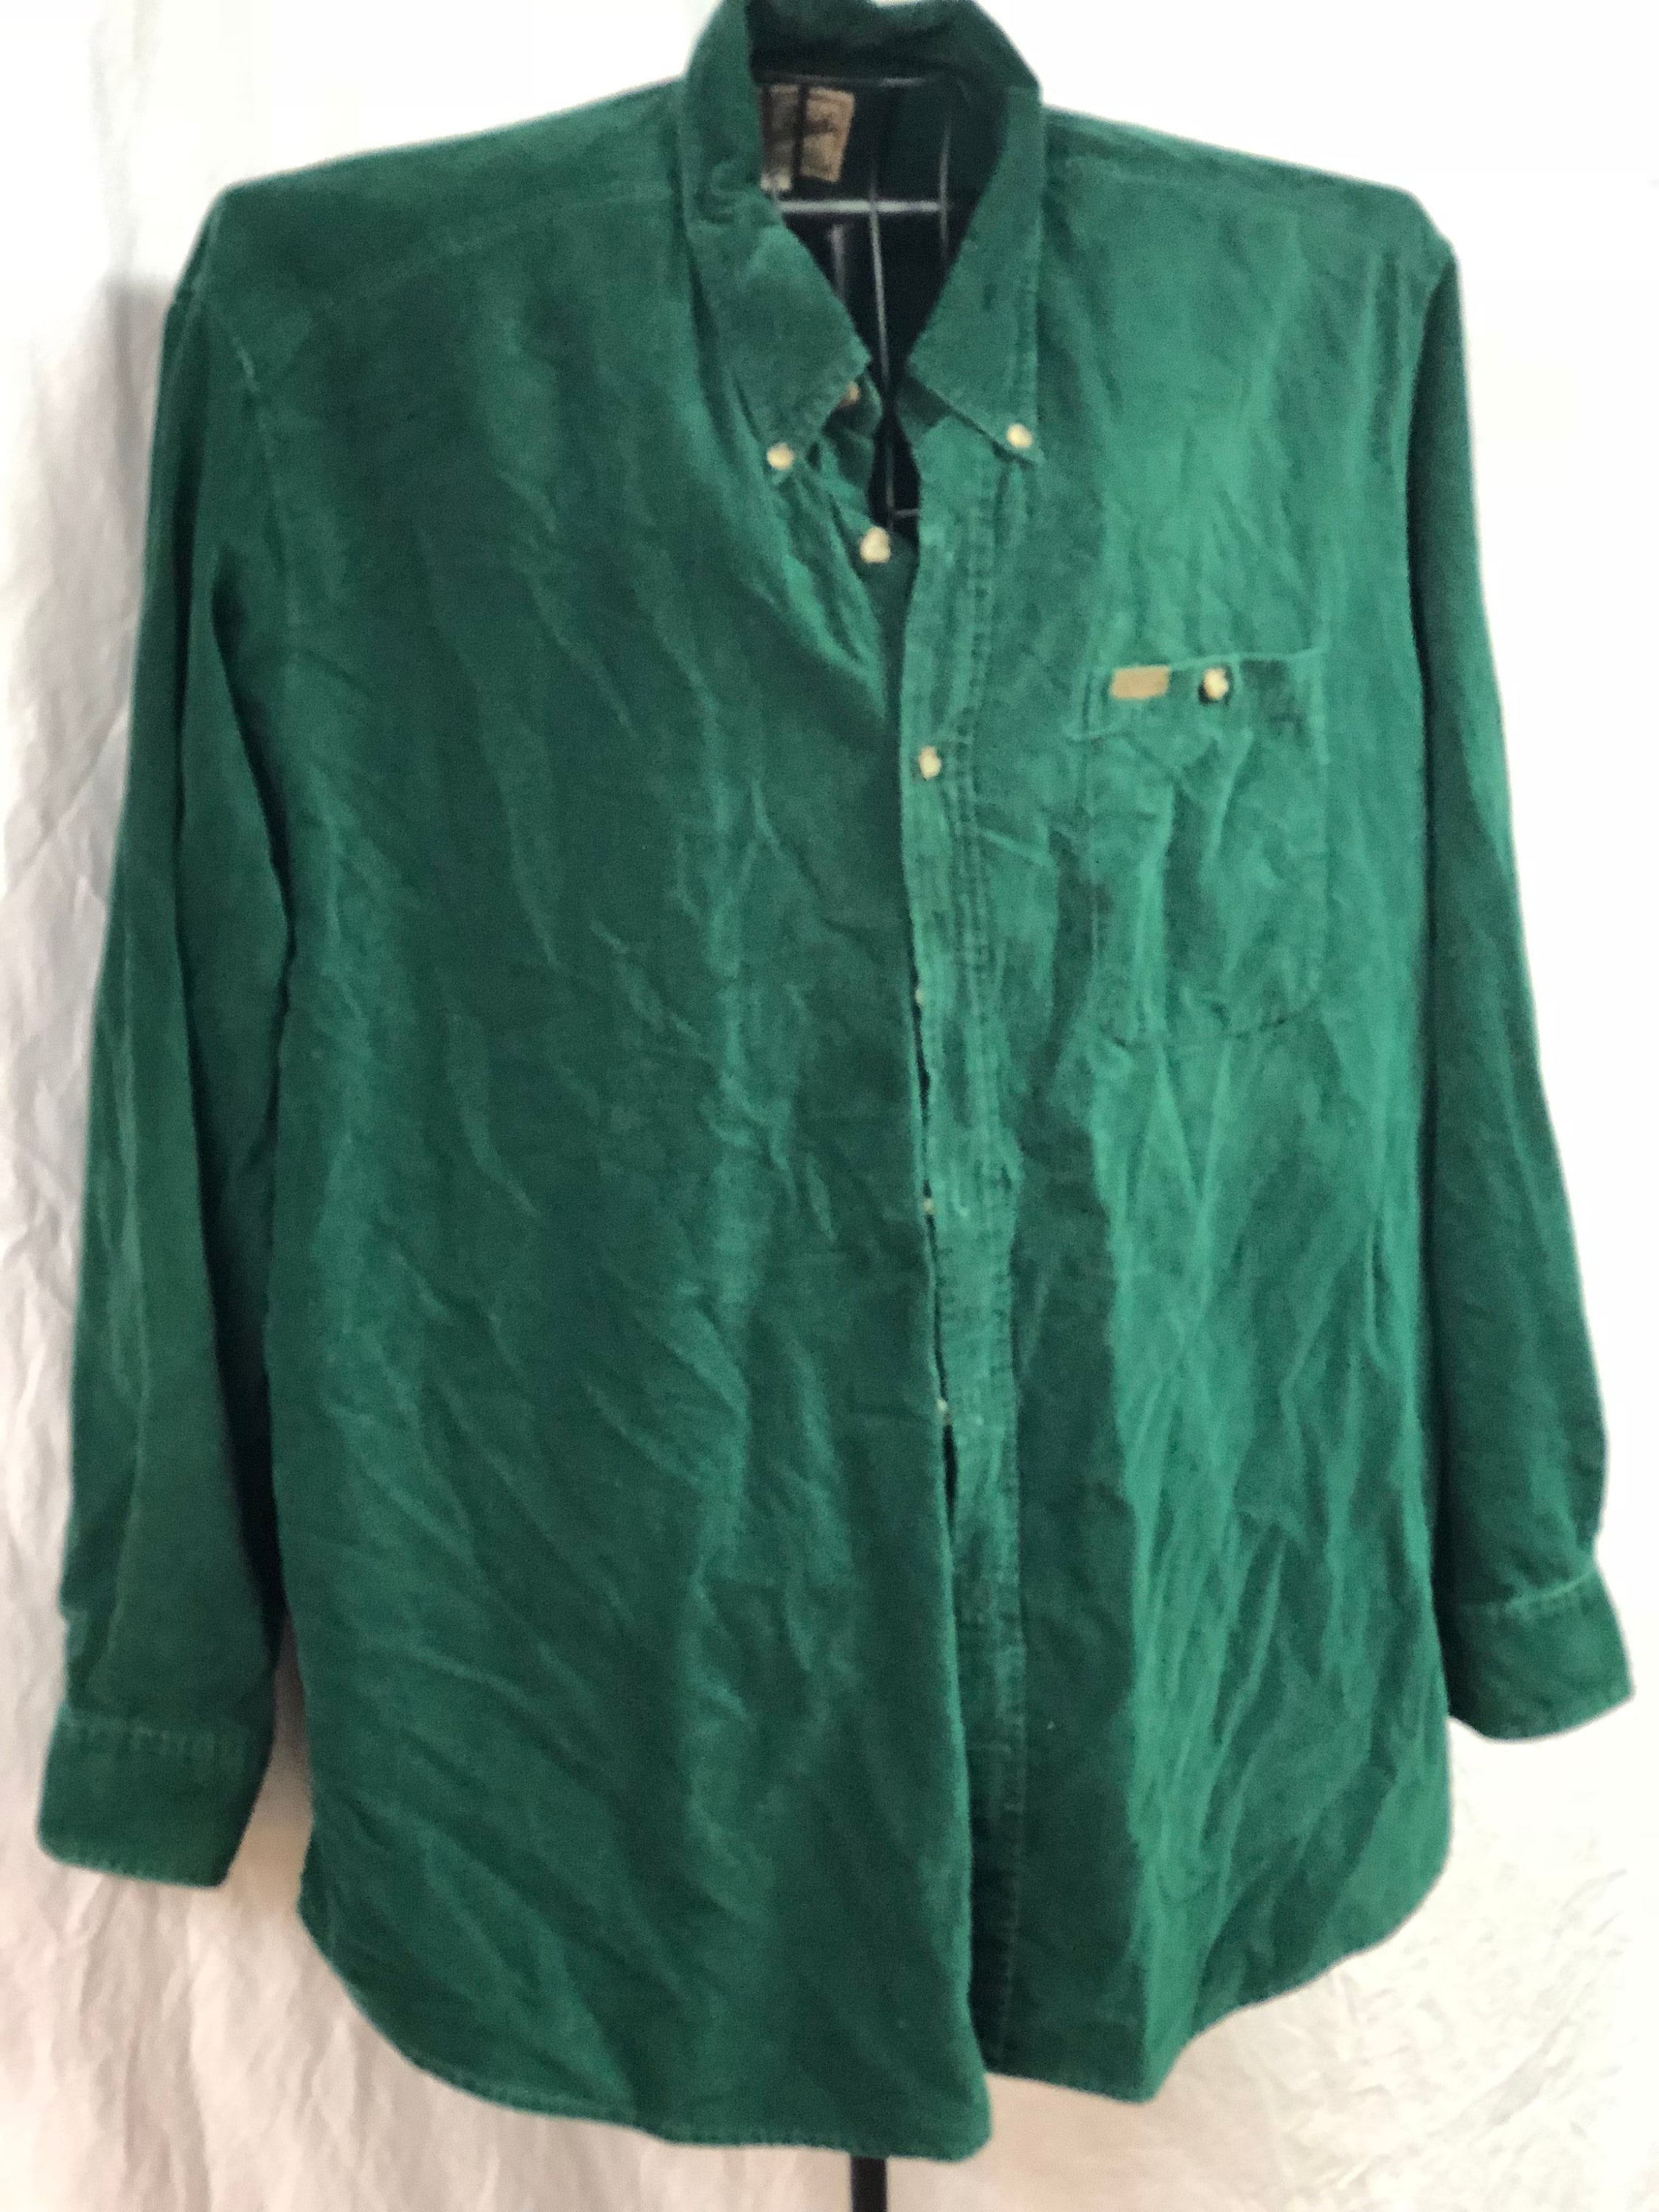 Green Woolrich corduroy button down vintage men's shirt - green shirt ...